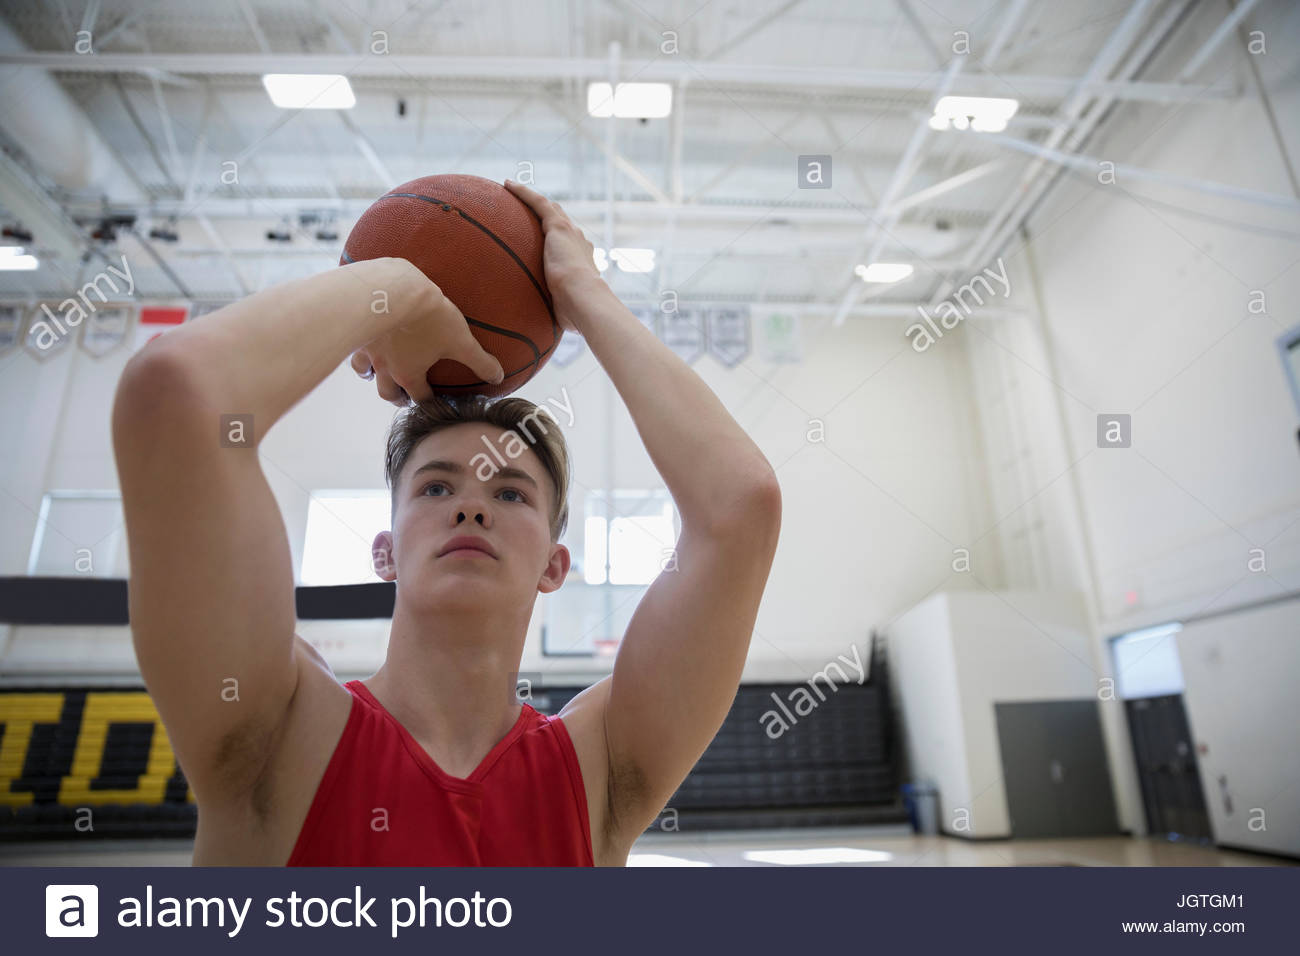 Joueur de basket-ball masculin porté college basketball shooting in gymnasium Banque D'Images